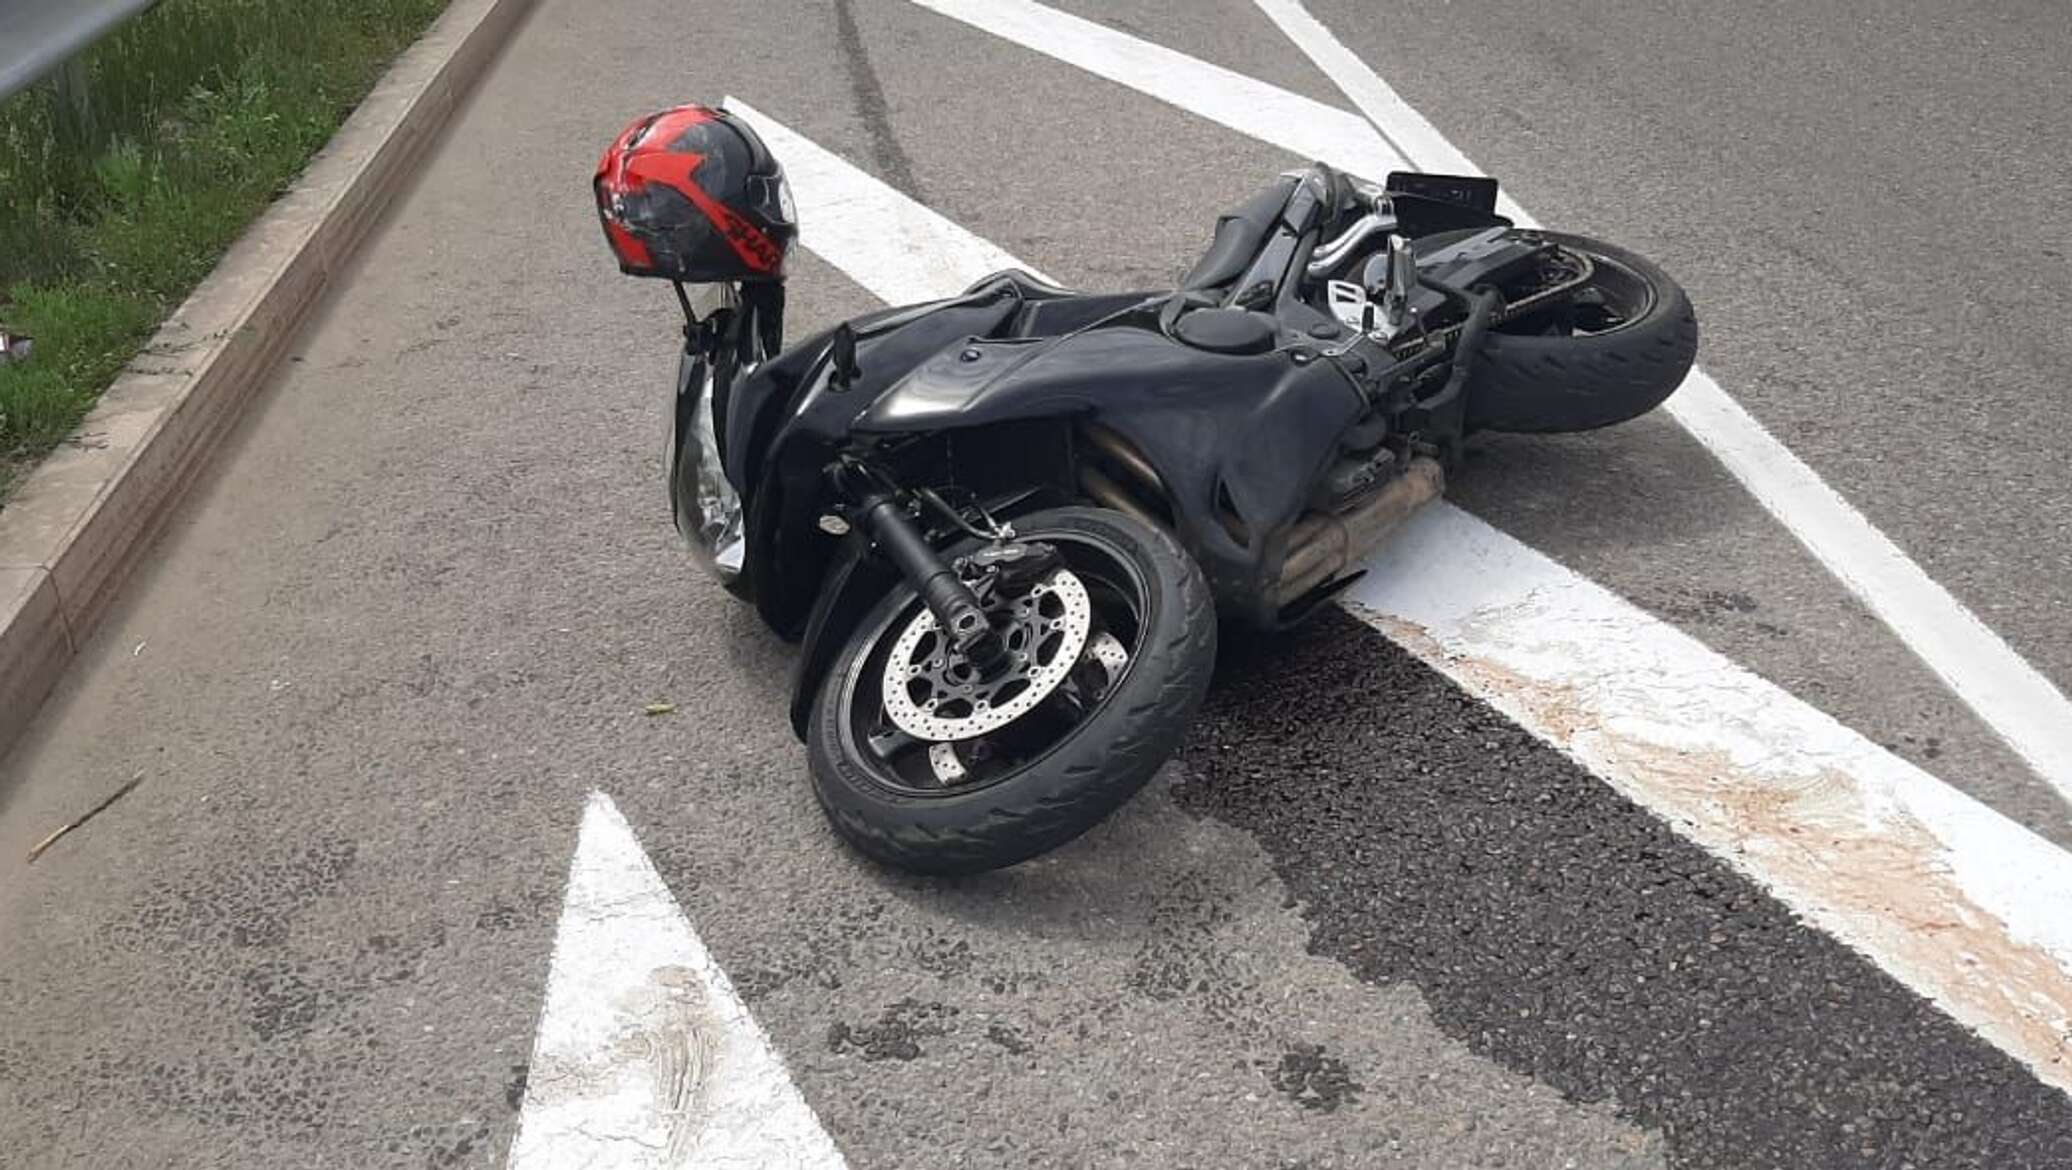 Разбитый мотоцикл диабло